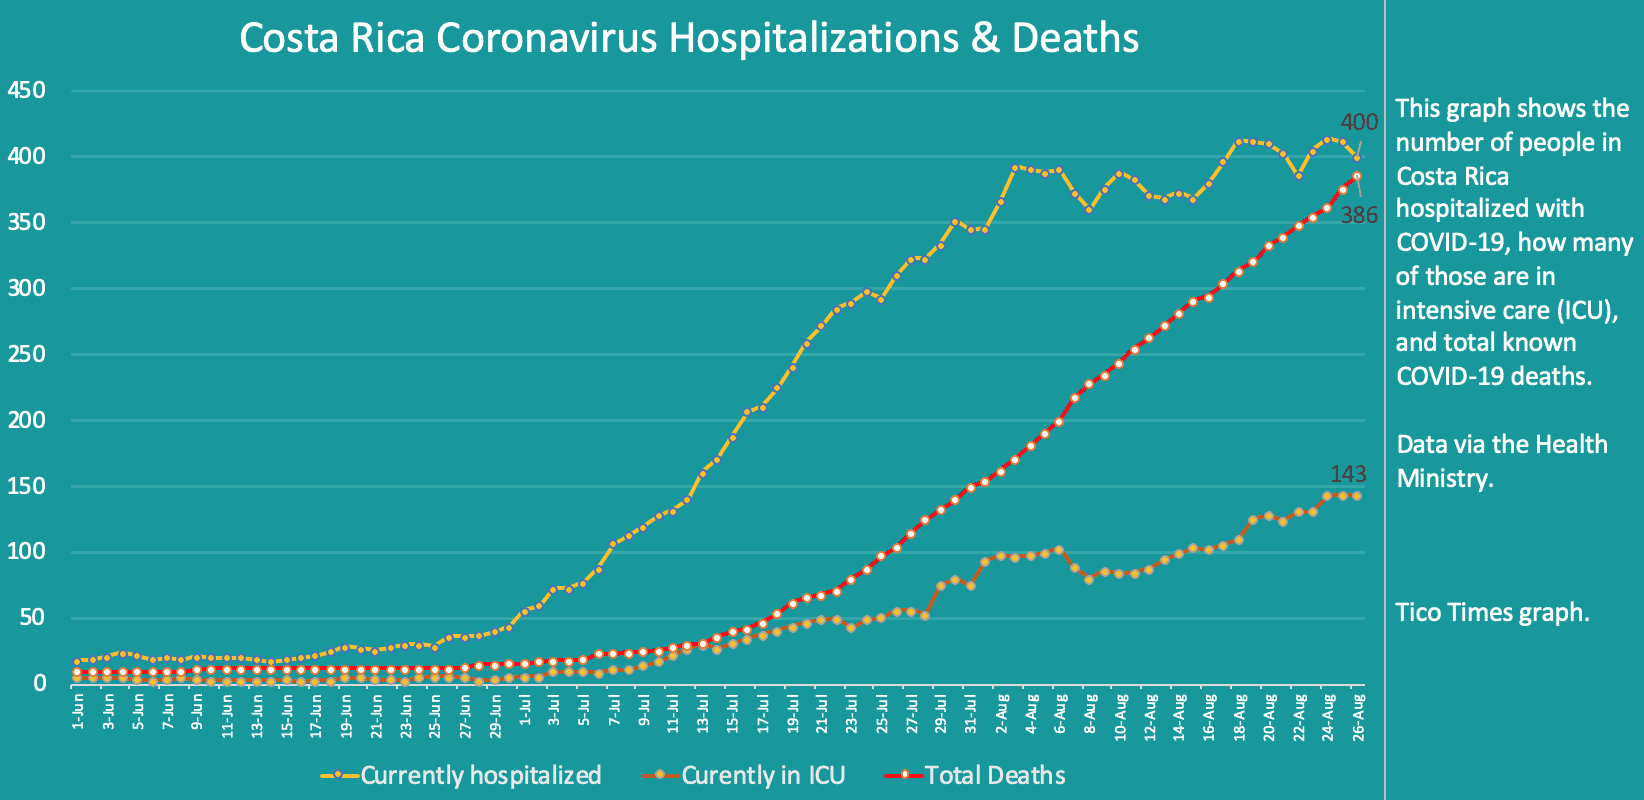 Costa Rica coronavirus hospitalizations and deaths on August 26, 2020